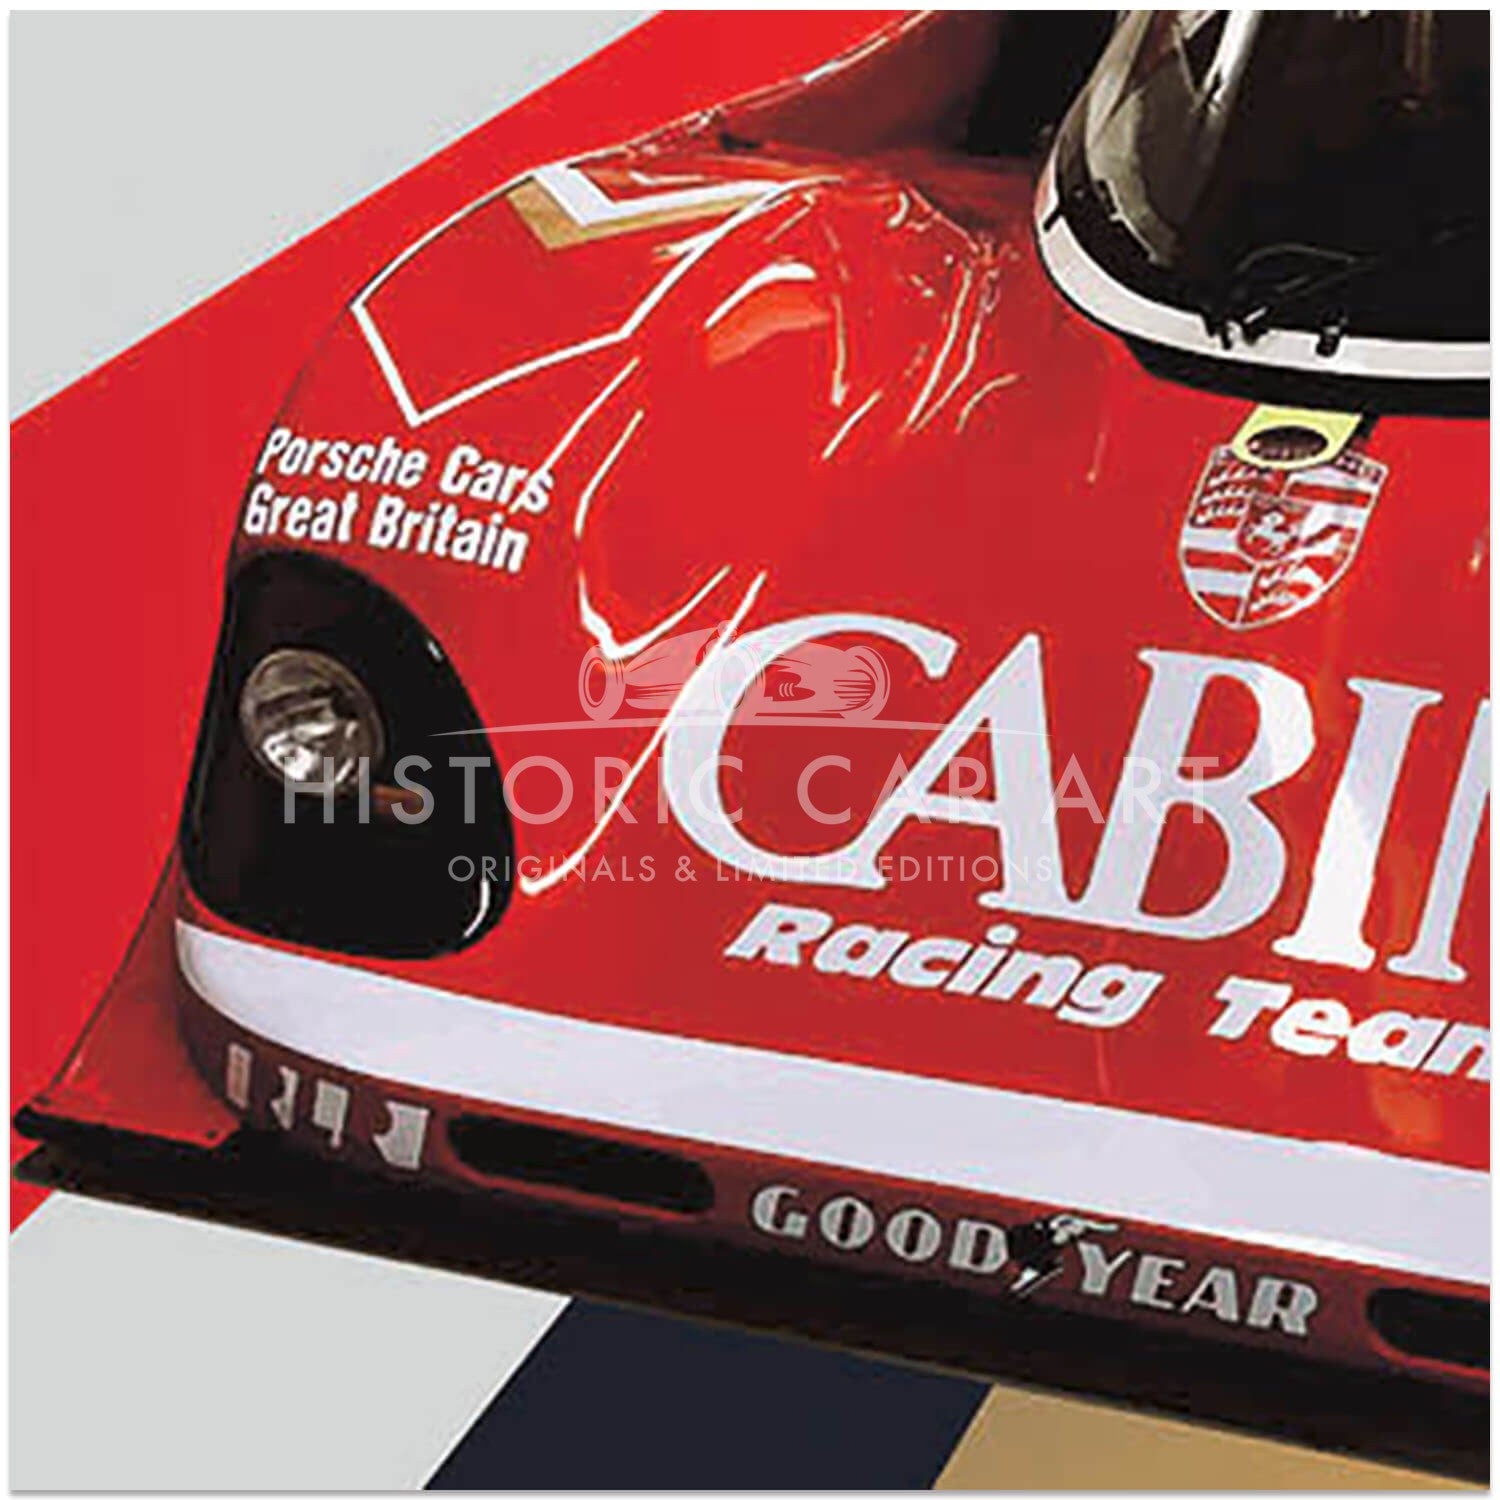 Cabin Racing Team | Porsche 962 | Group C | Art Print | Poster